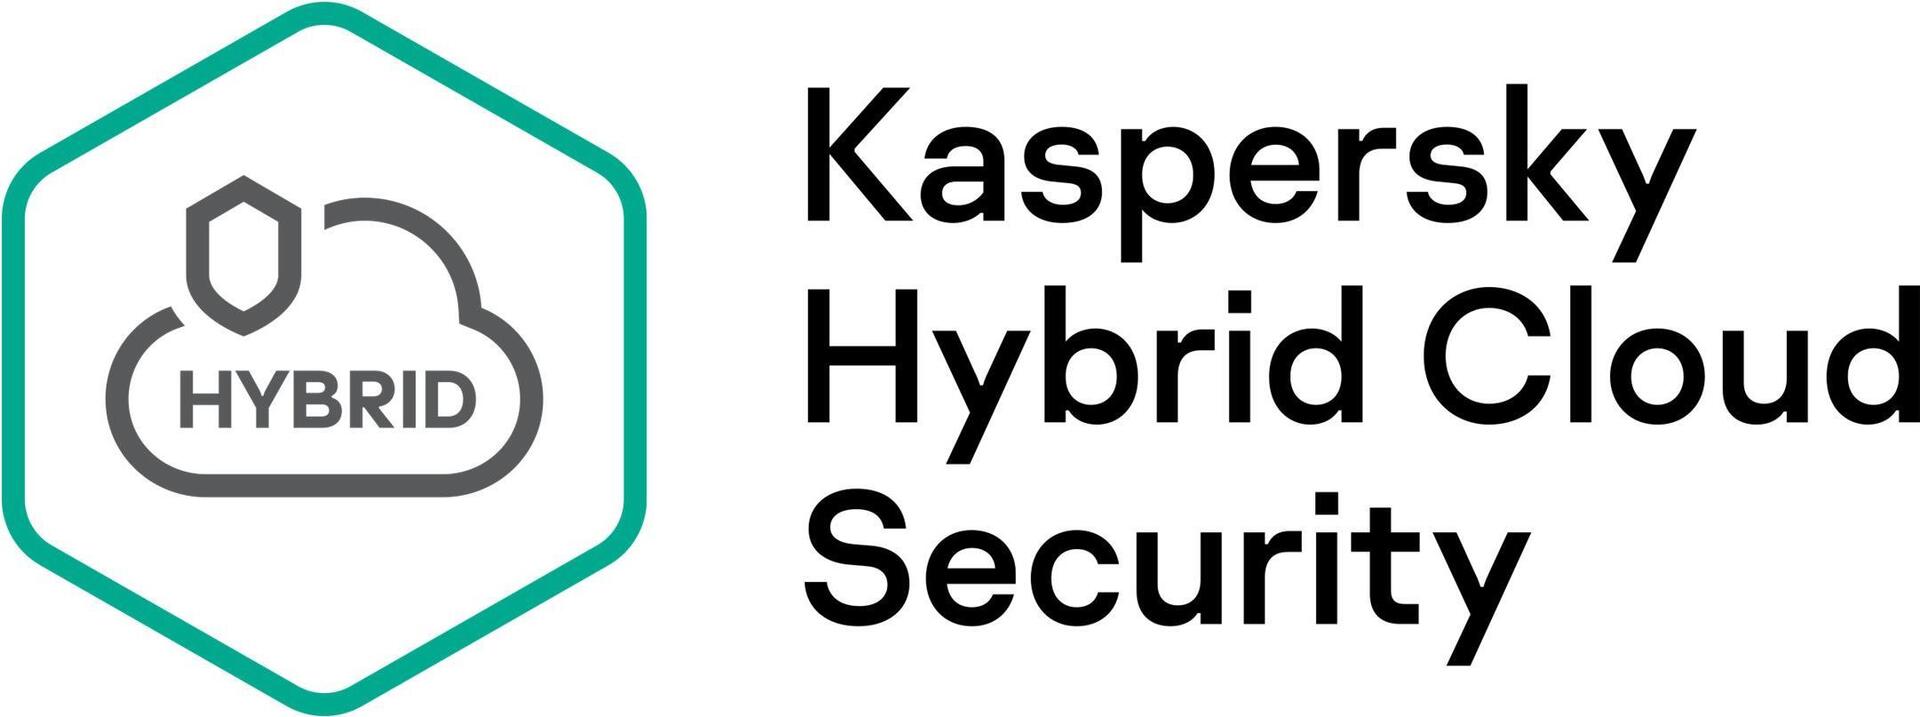 Kaspersky Hybrid Cloud Security Desktop (KL4155XARTD)